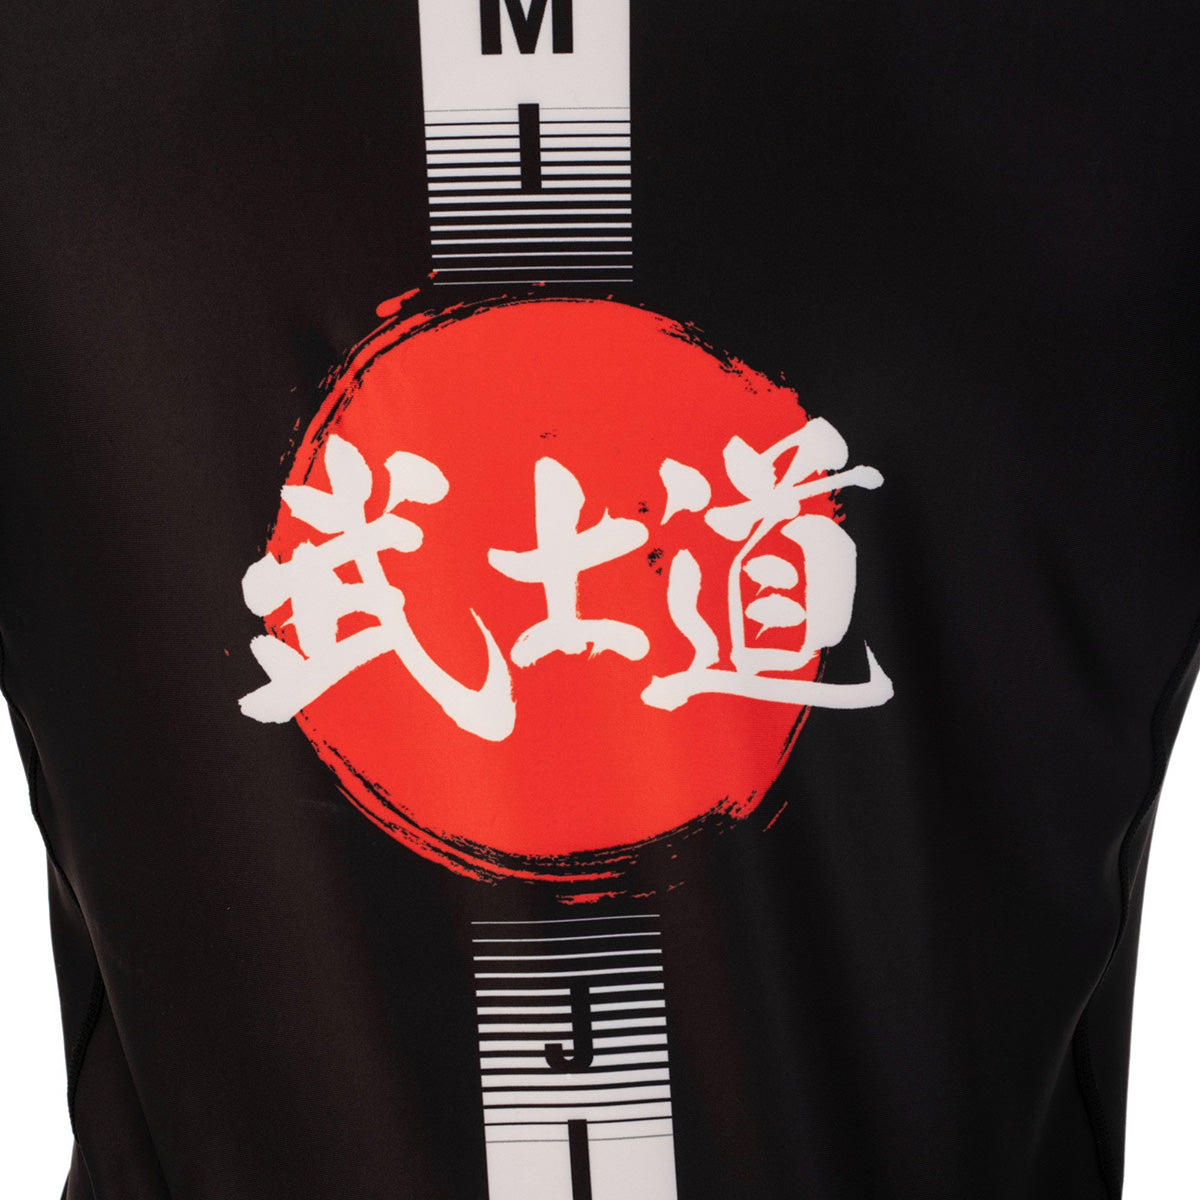 Tatami Fightwear Bushido Short Sleeve Rashguard - Black Tatami Fightwear